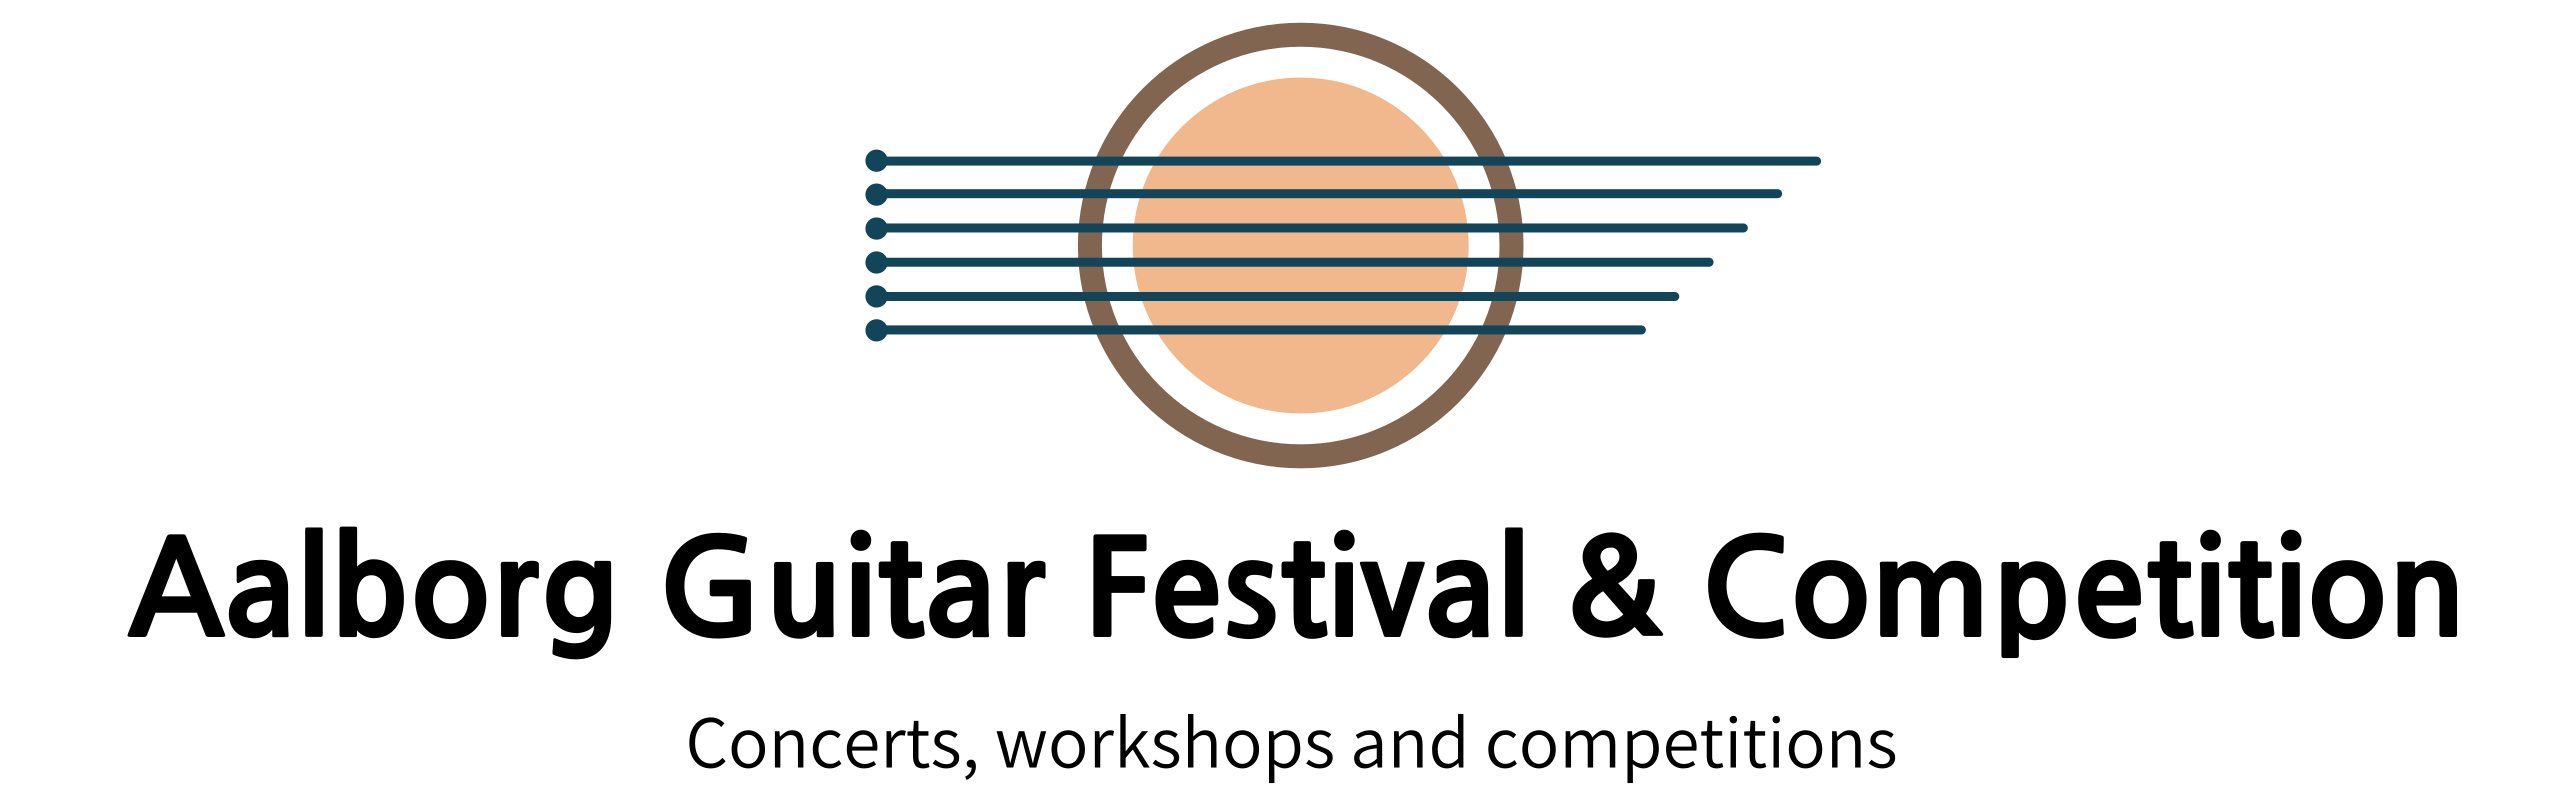 Komponist Konkurrence - image Transparent-Logo3 on https://aalborgguitarfestival.com